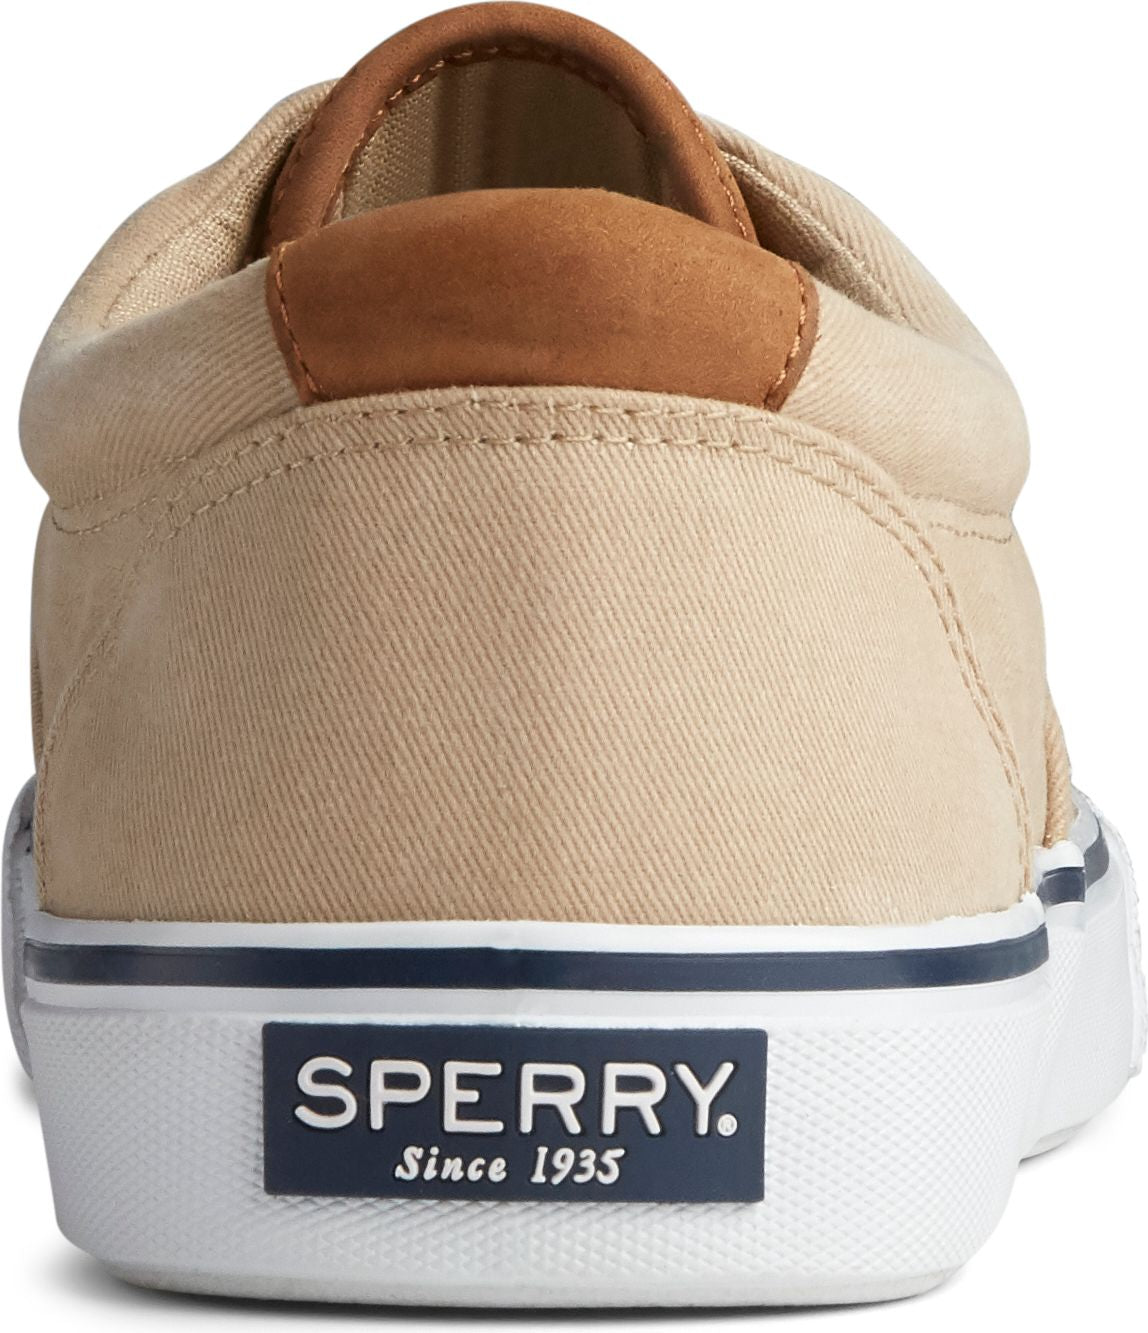 Sperry Shoes Striper Ii Cvo Chino